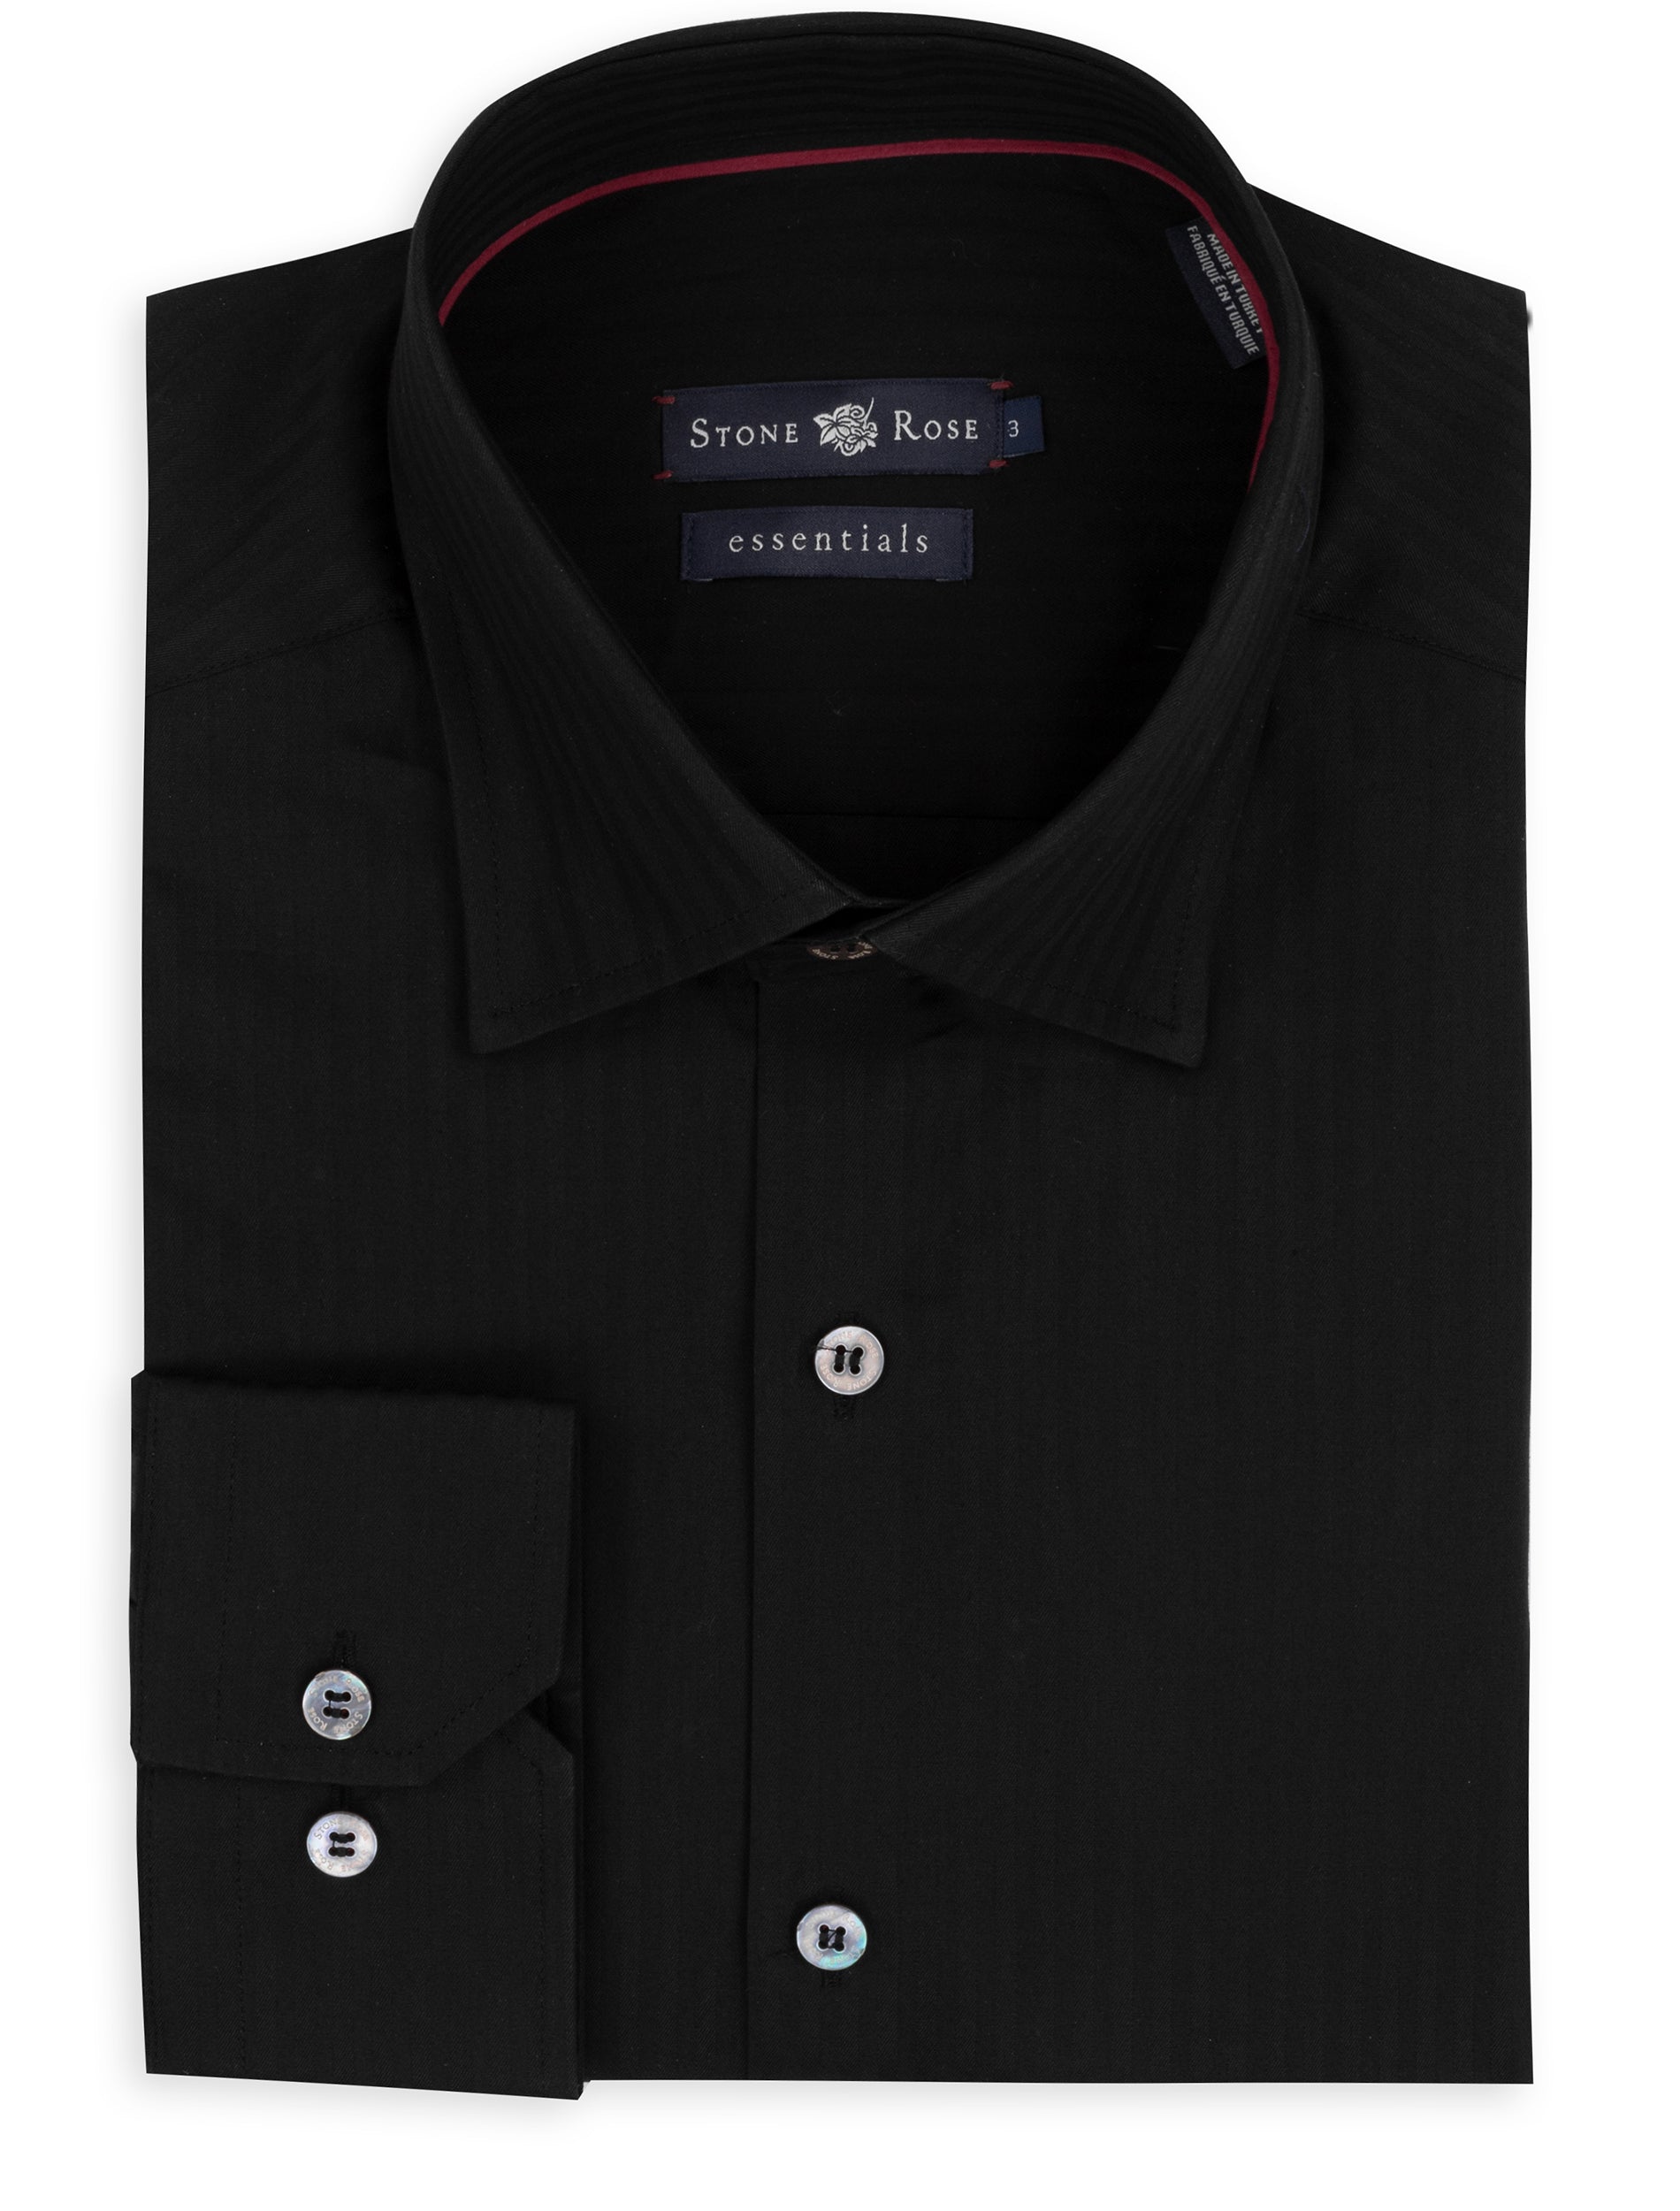 Tonal Stripe Button up Shirt in Black-Stone Rose